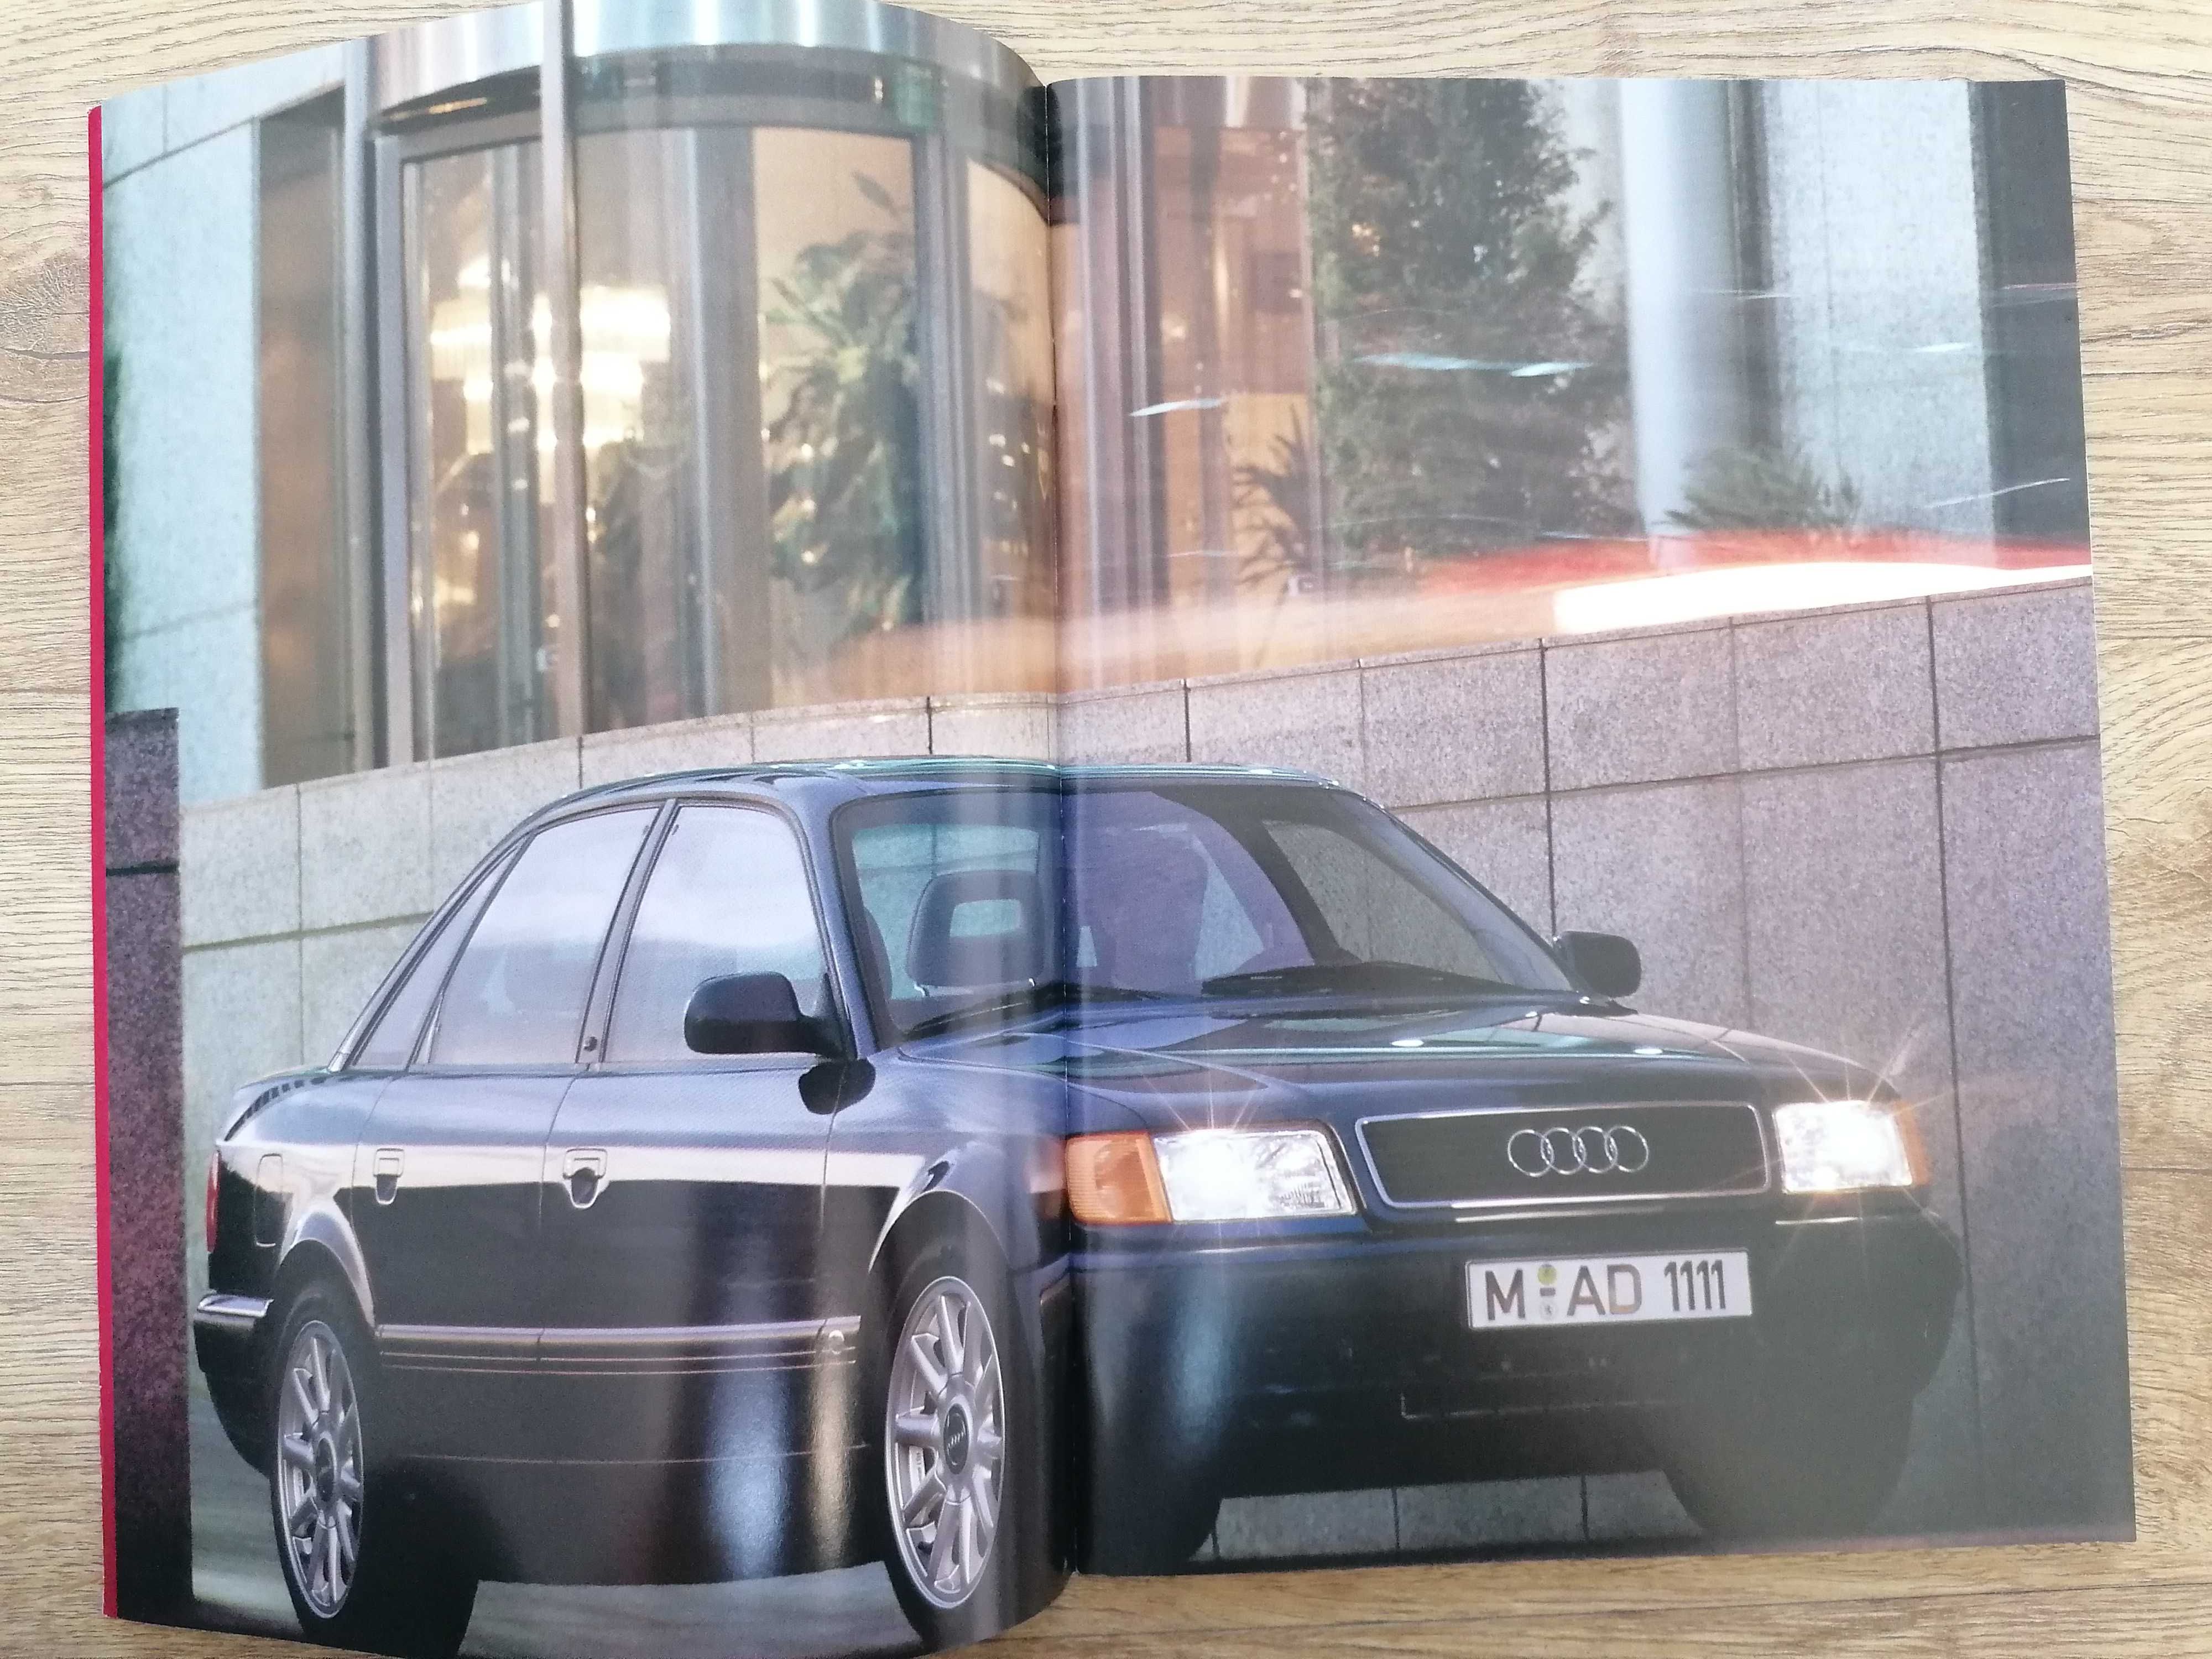 Prospekt Audi 100 Sedan Avant